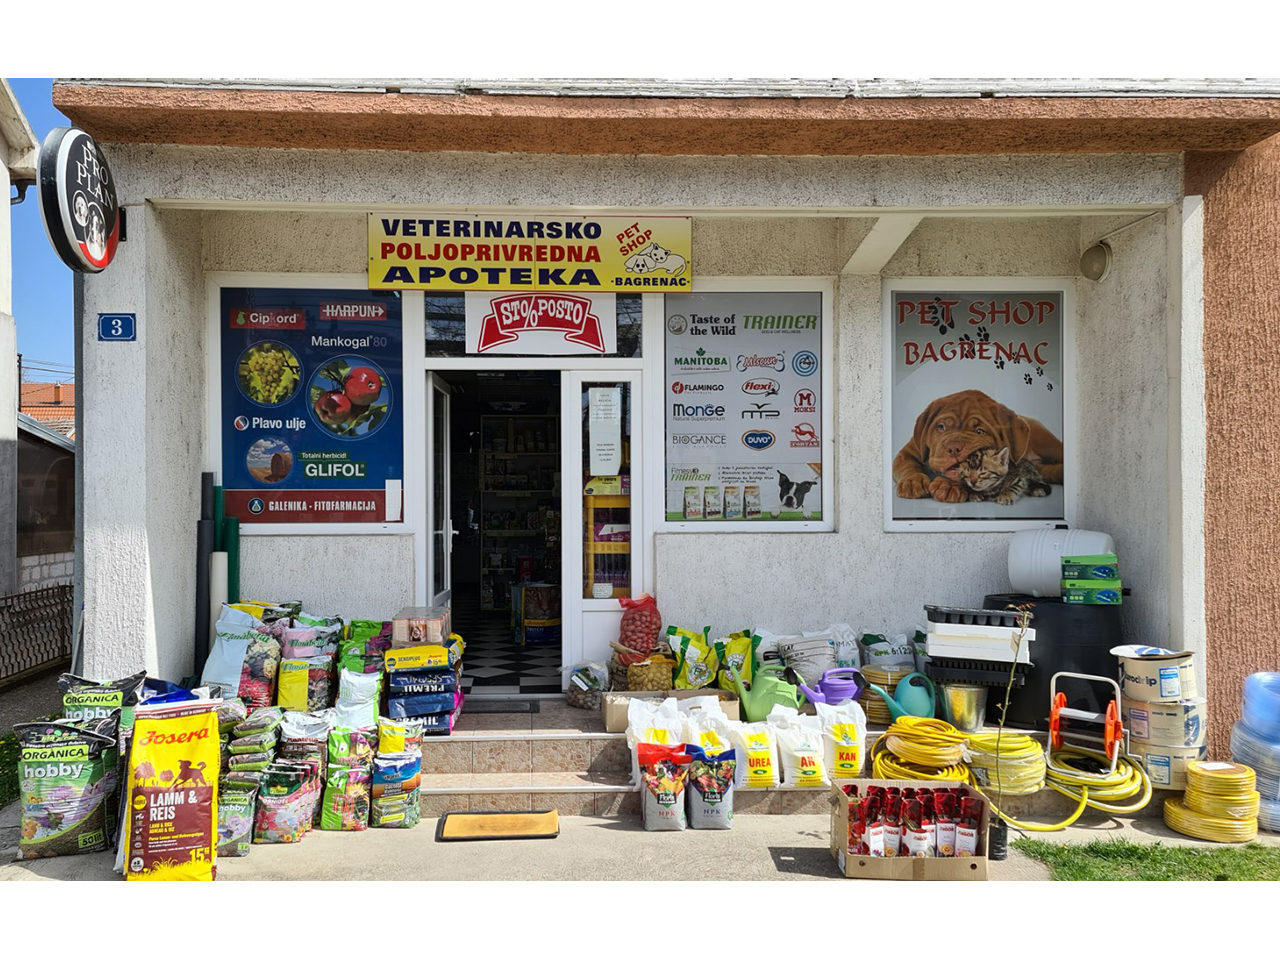 VETERINARY AGRICULTURAL PHARMACY AND PET SHOP BAGRENAC Veterinarian pharmacies Beograd